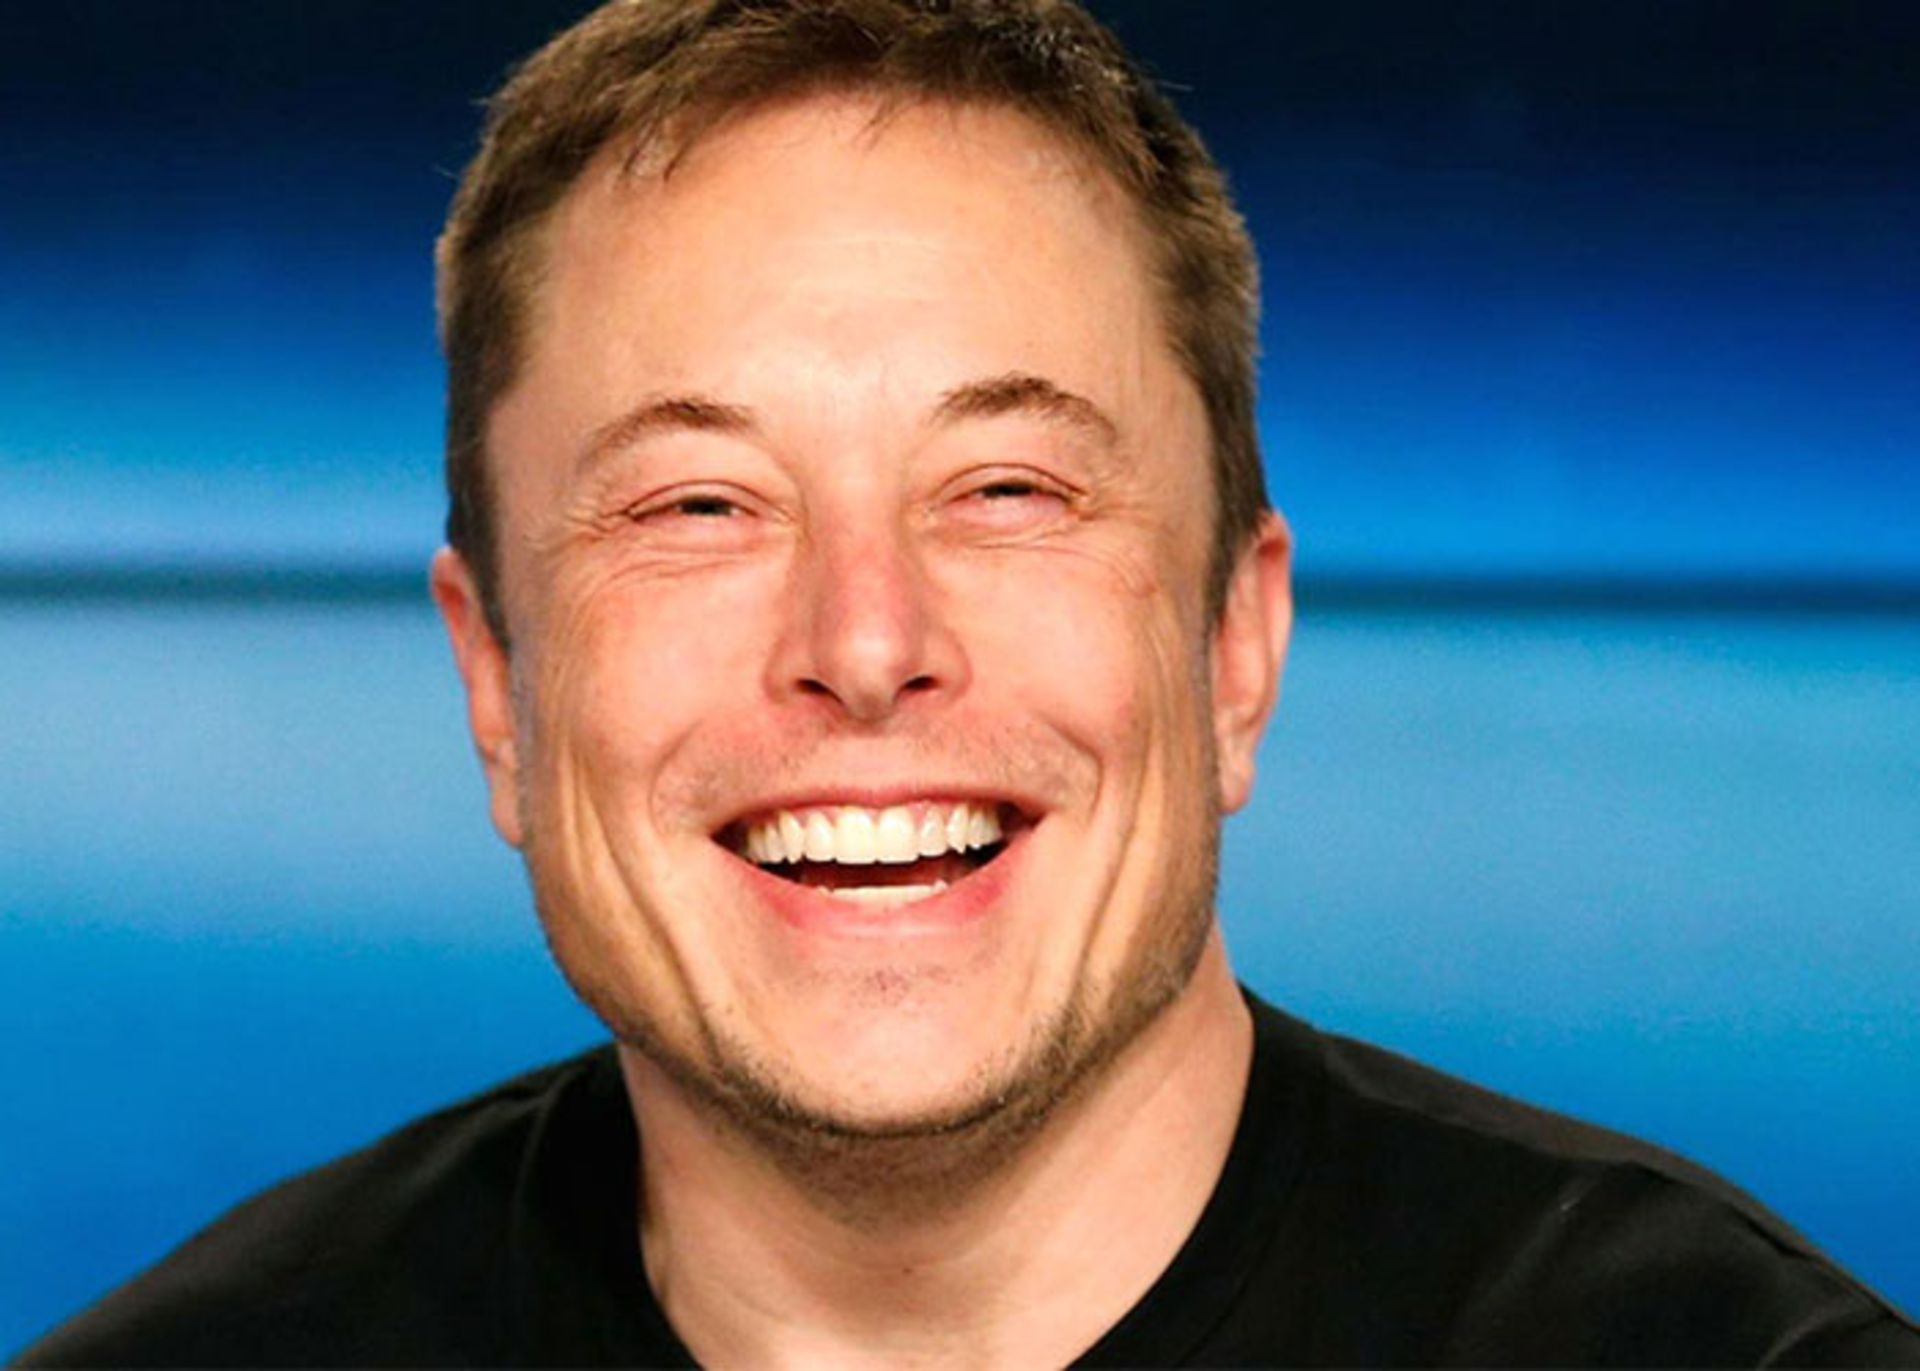 Elon Musk / ایلان ماسک